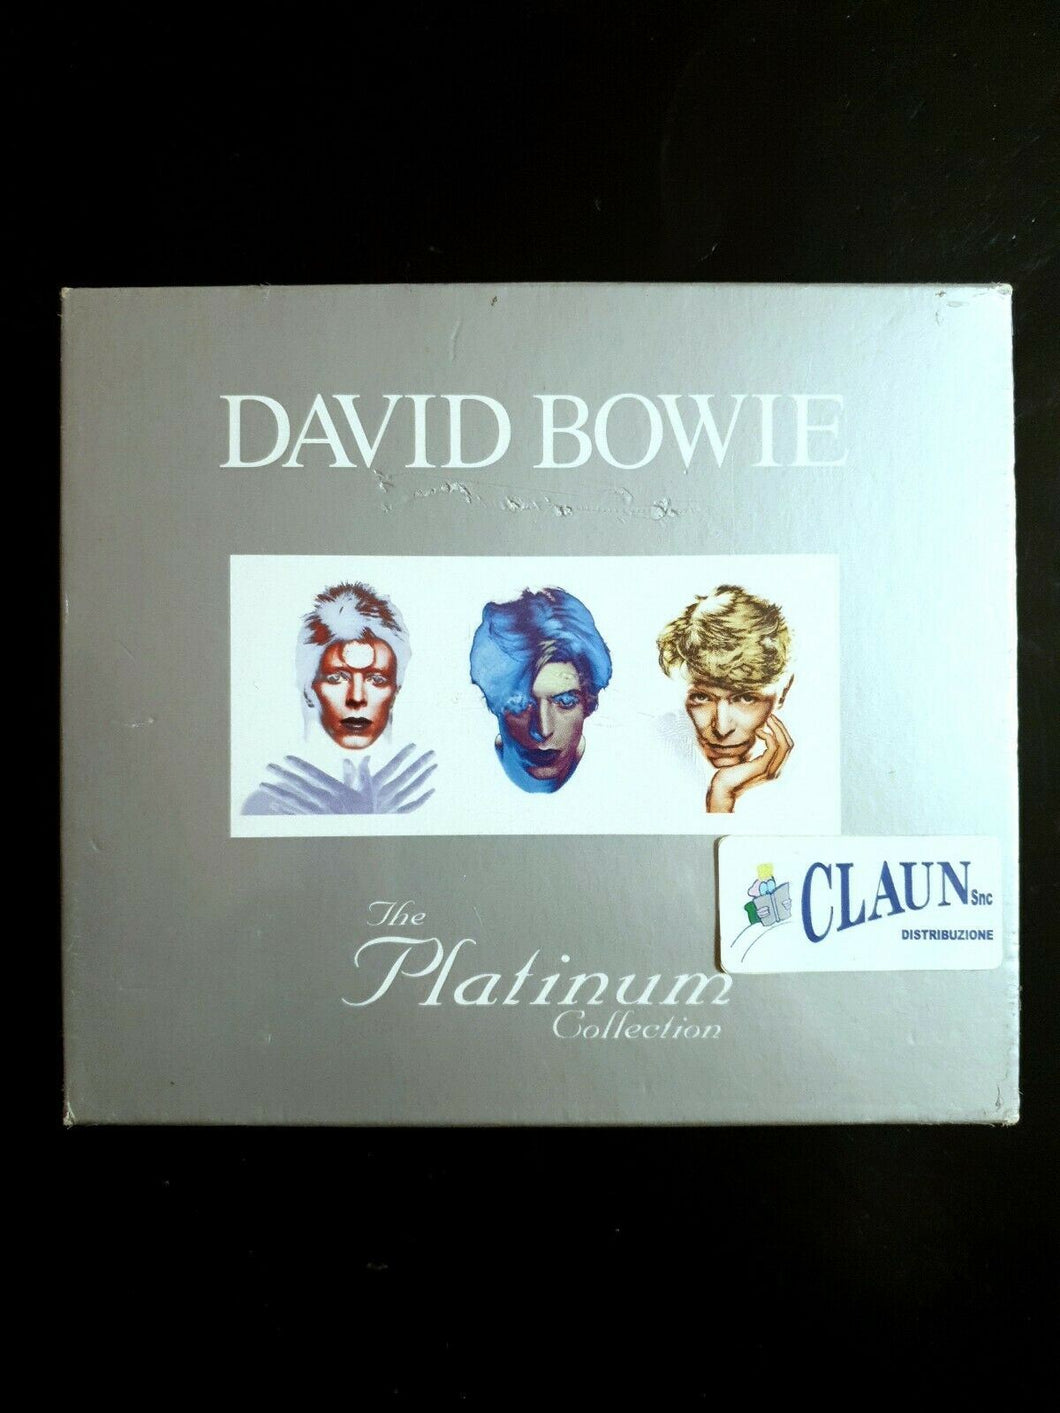 DAVID BOWIE - PLATINUM COLLECTION       3 CD - Nuovo sigillato